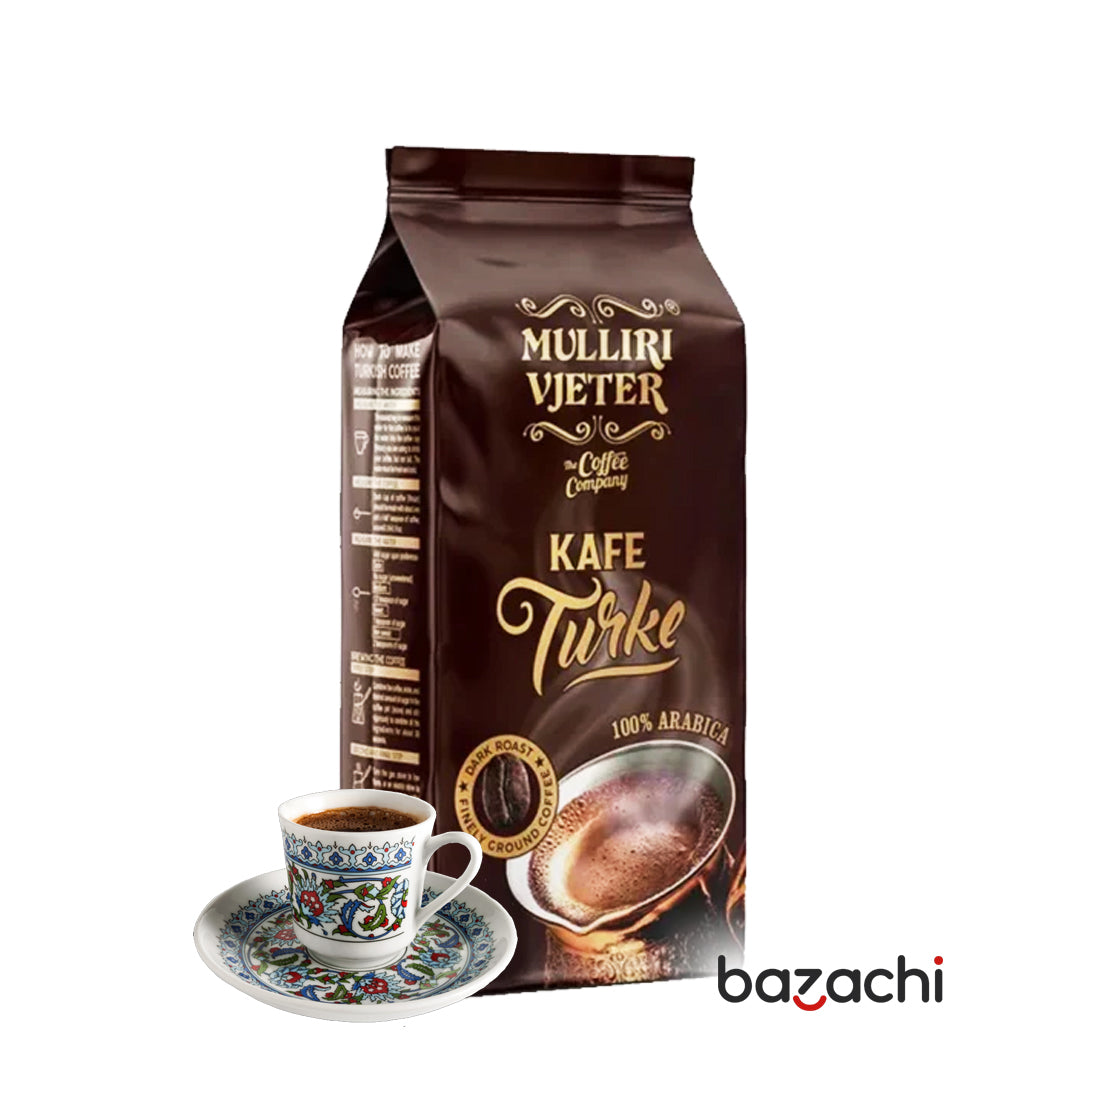 Mulliri Vjeter 100% Arabica Turkish Coffee 500g